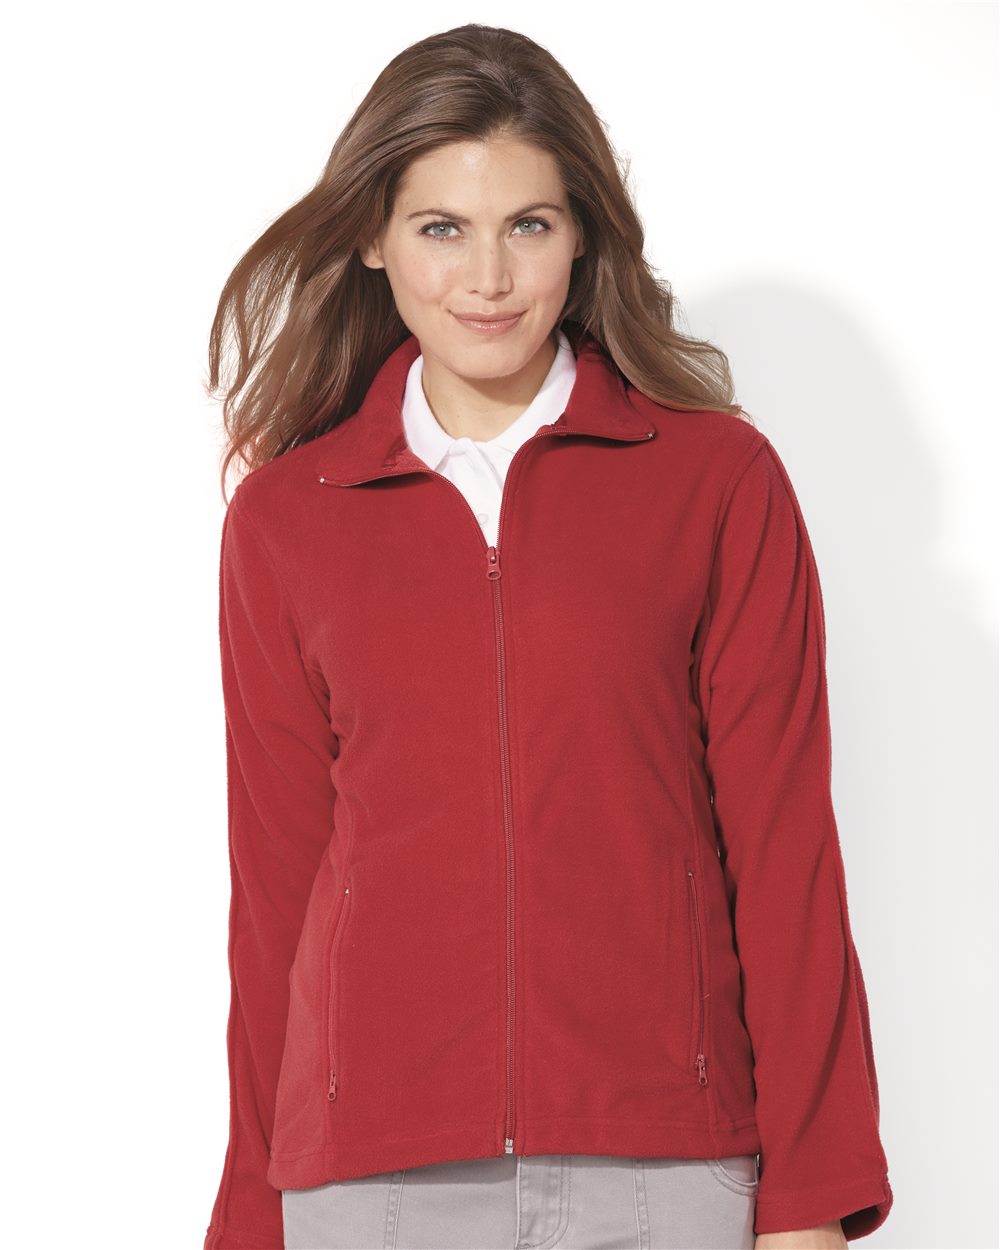 FeatherLite 5301 - Ladies' Moisture Resistant Micro Fleece Jacket